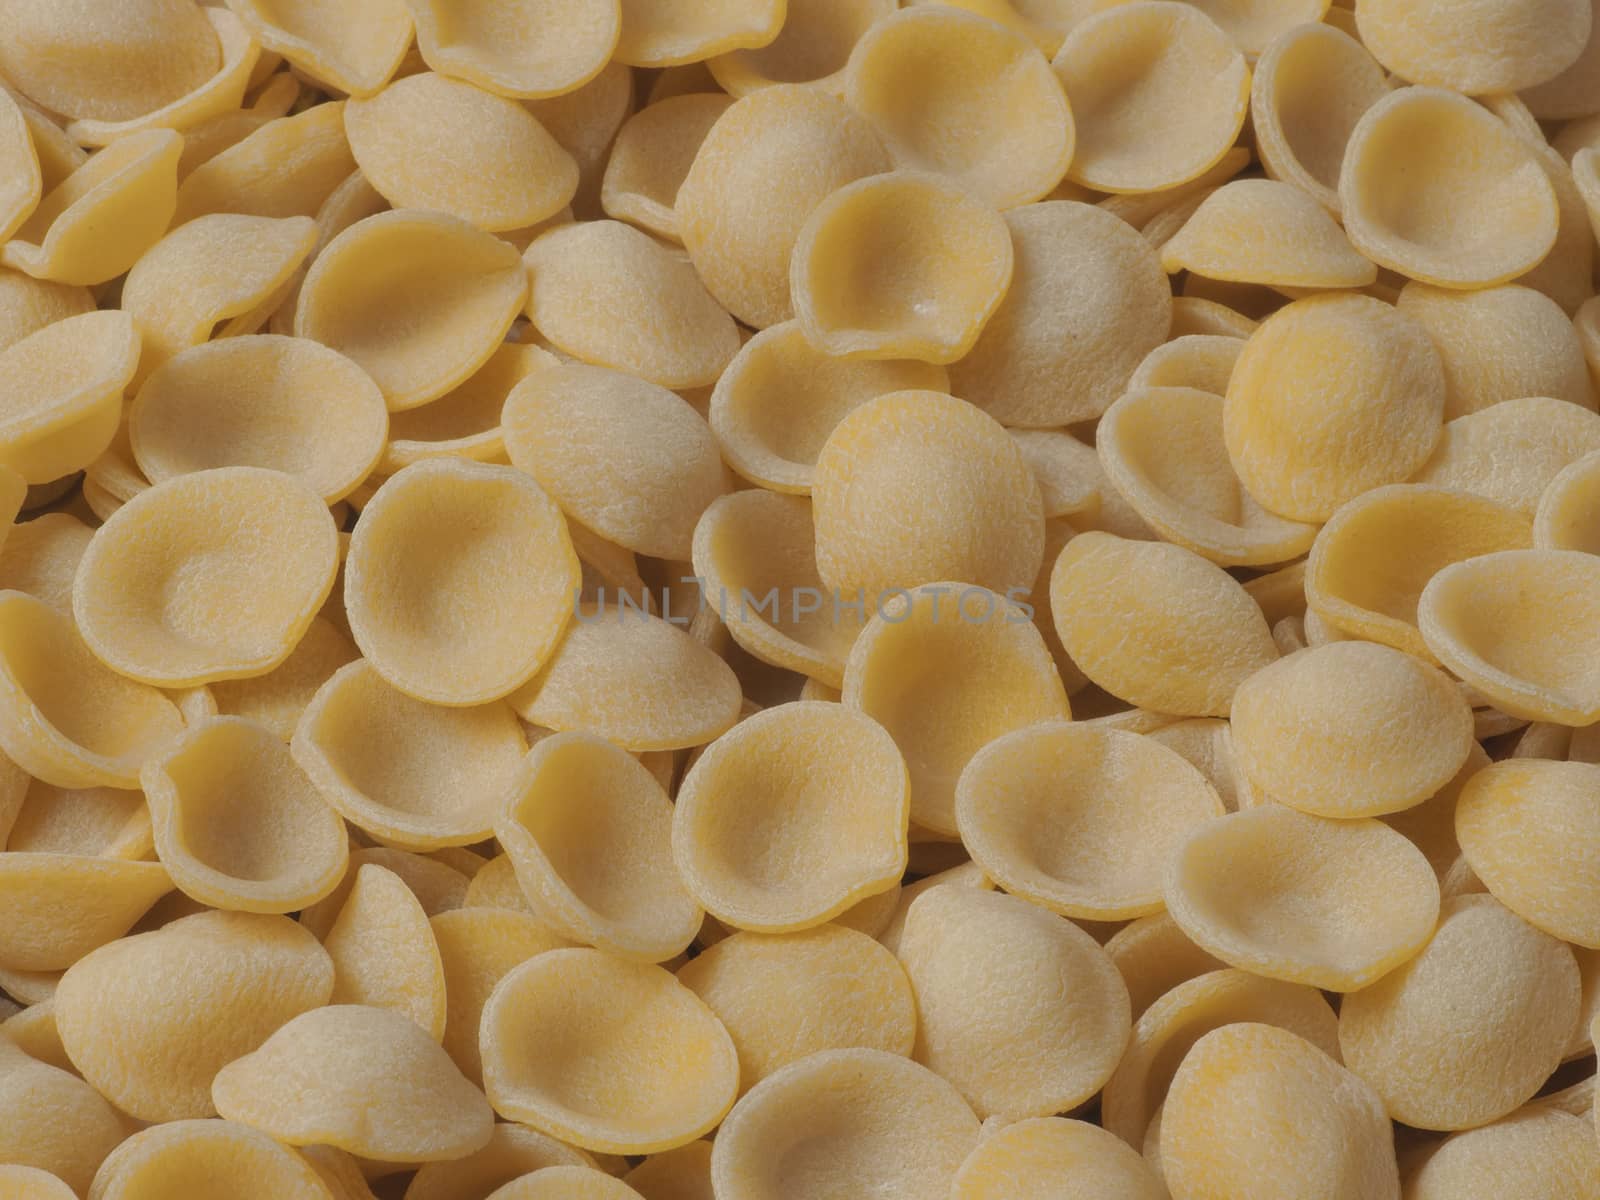 close up of dried italian orecchiette pasta food background